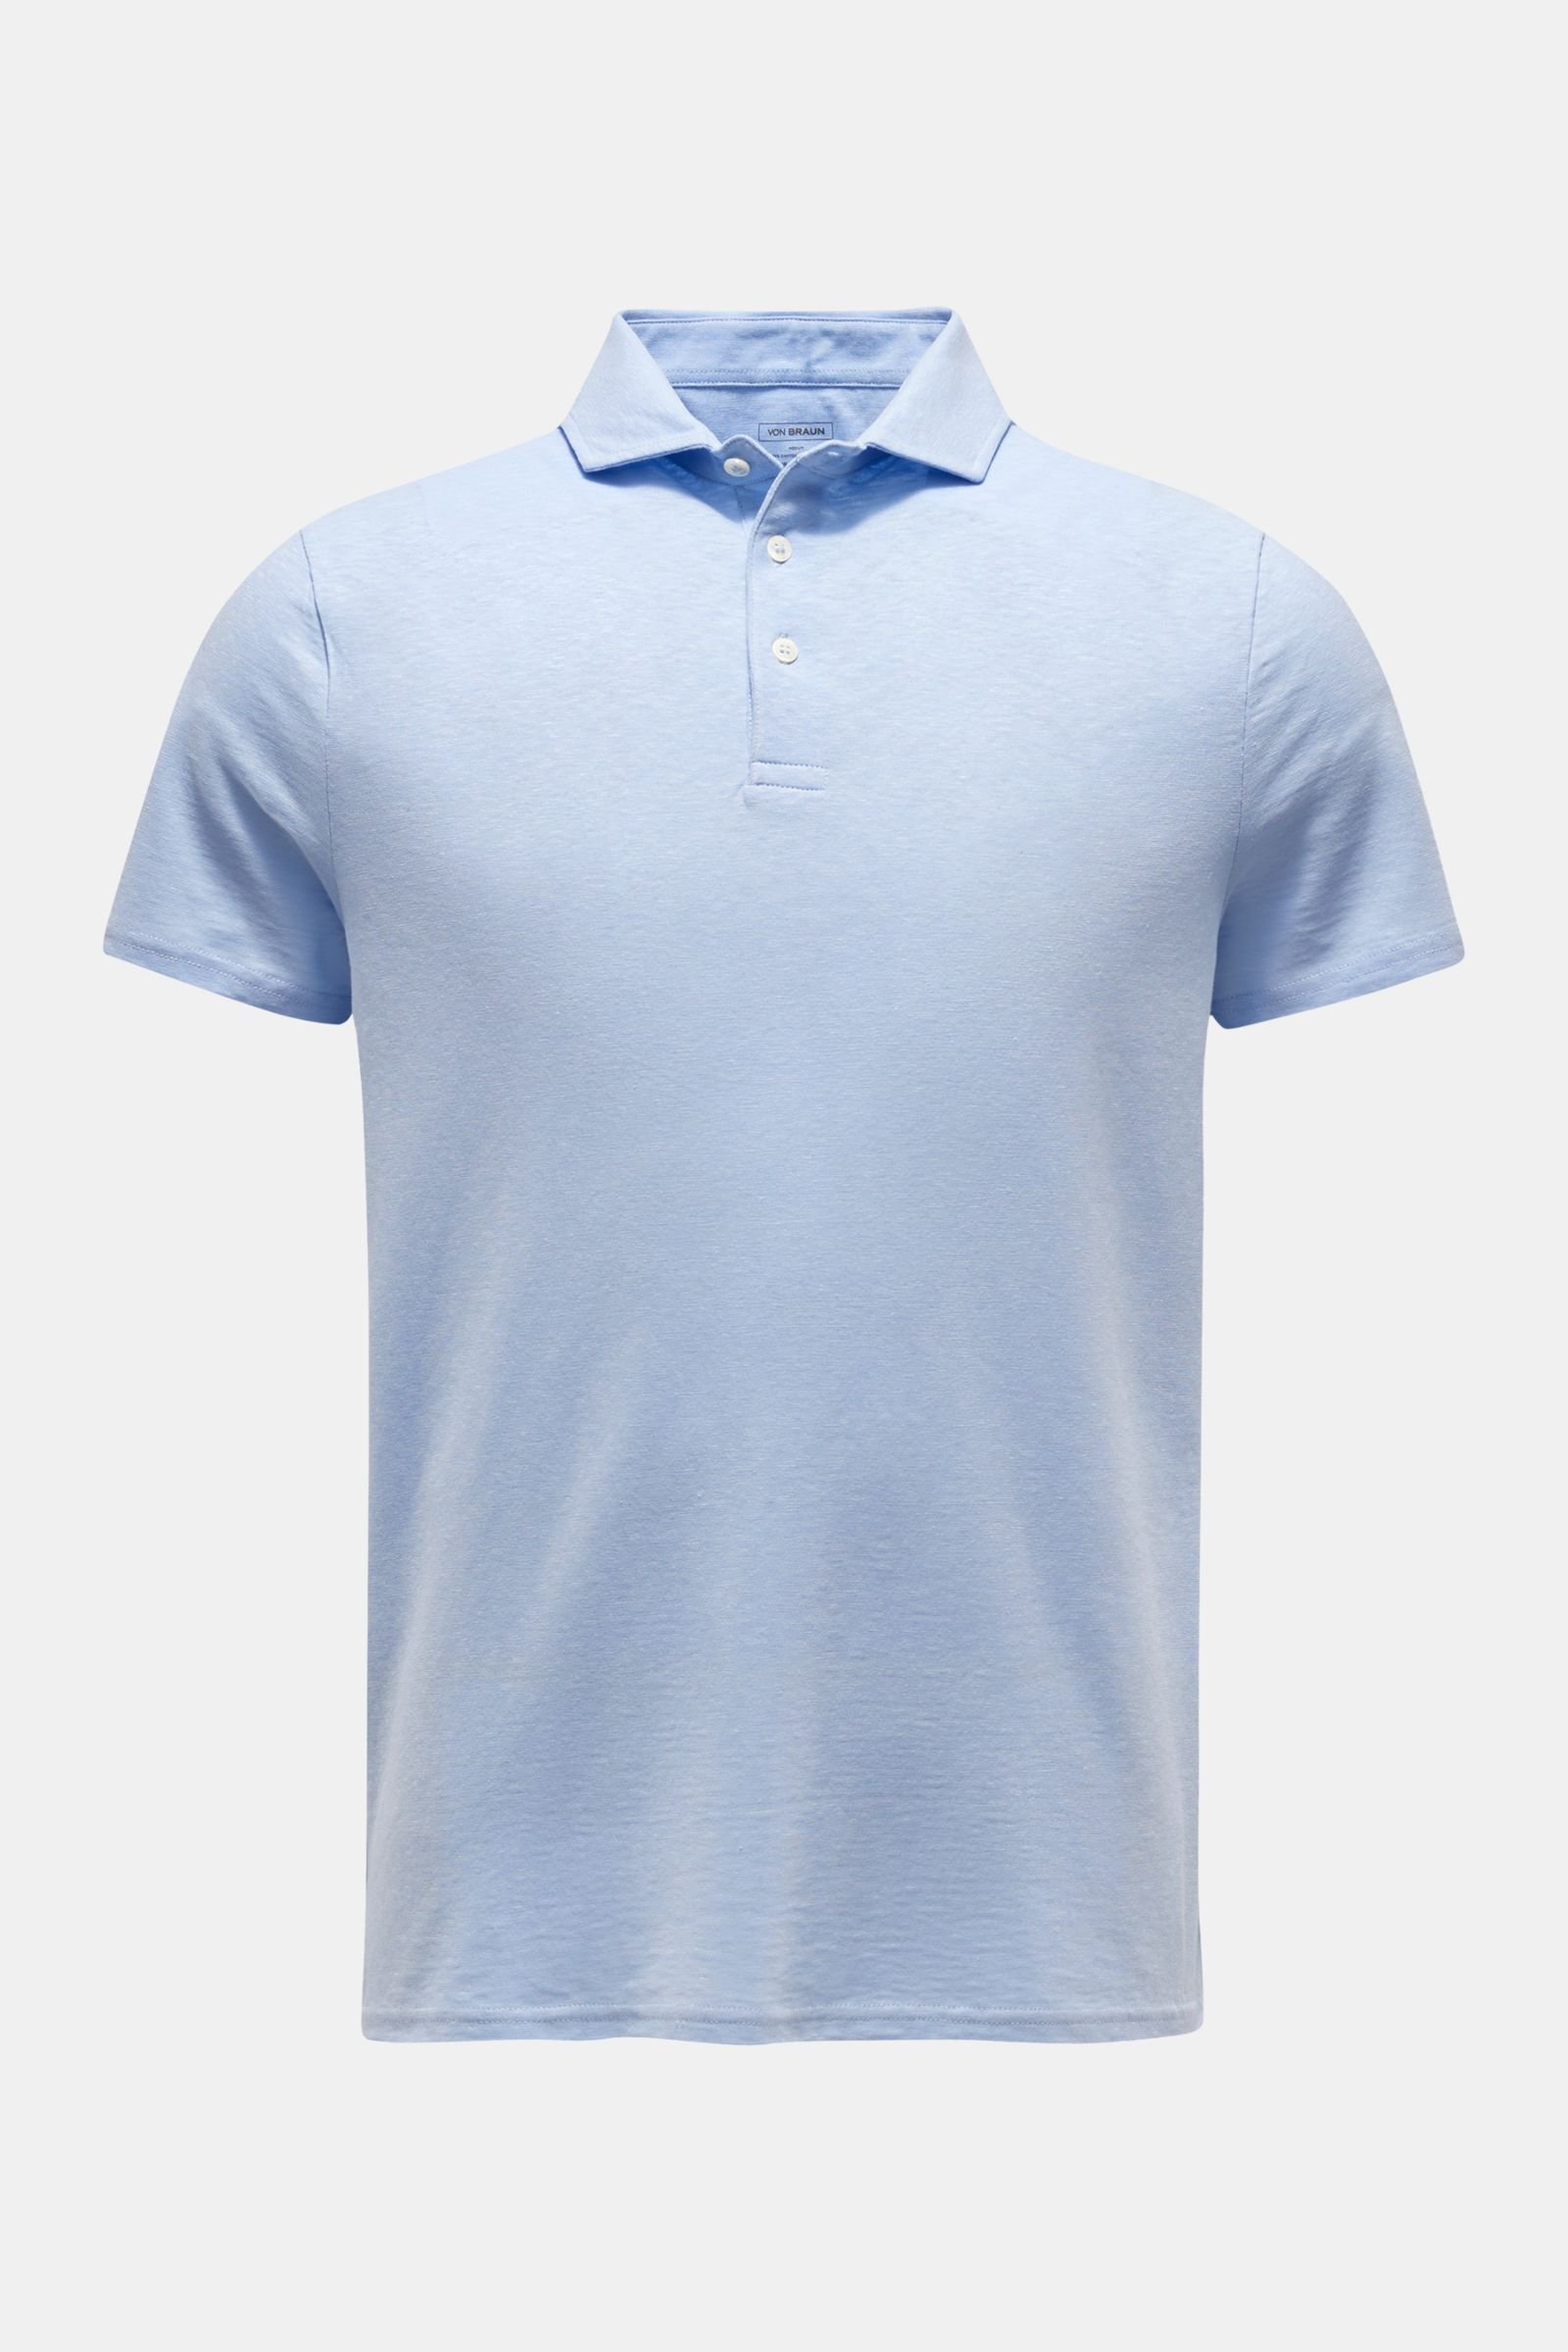 Polo shirt light blue